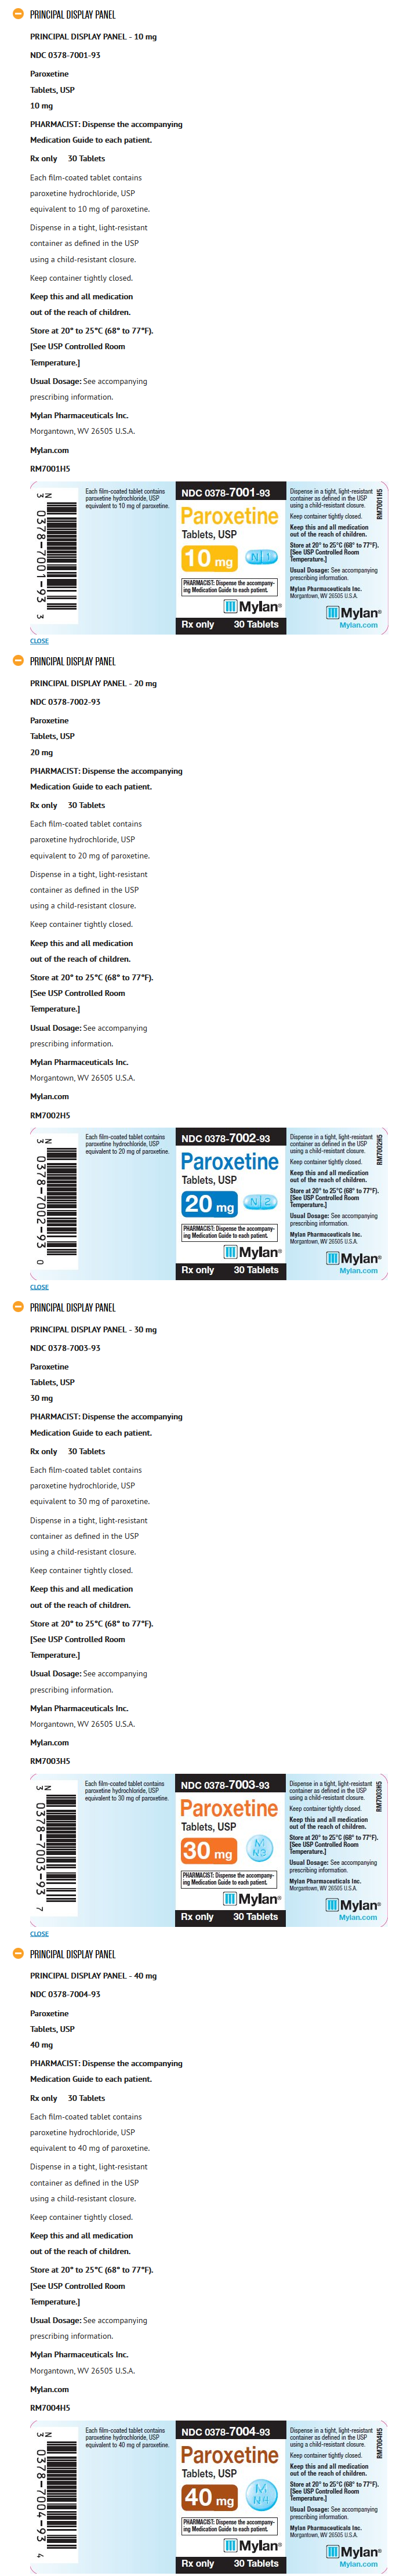 Paroxetine pdp.png